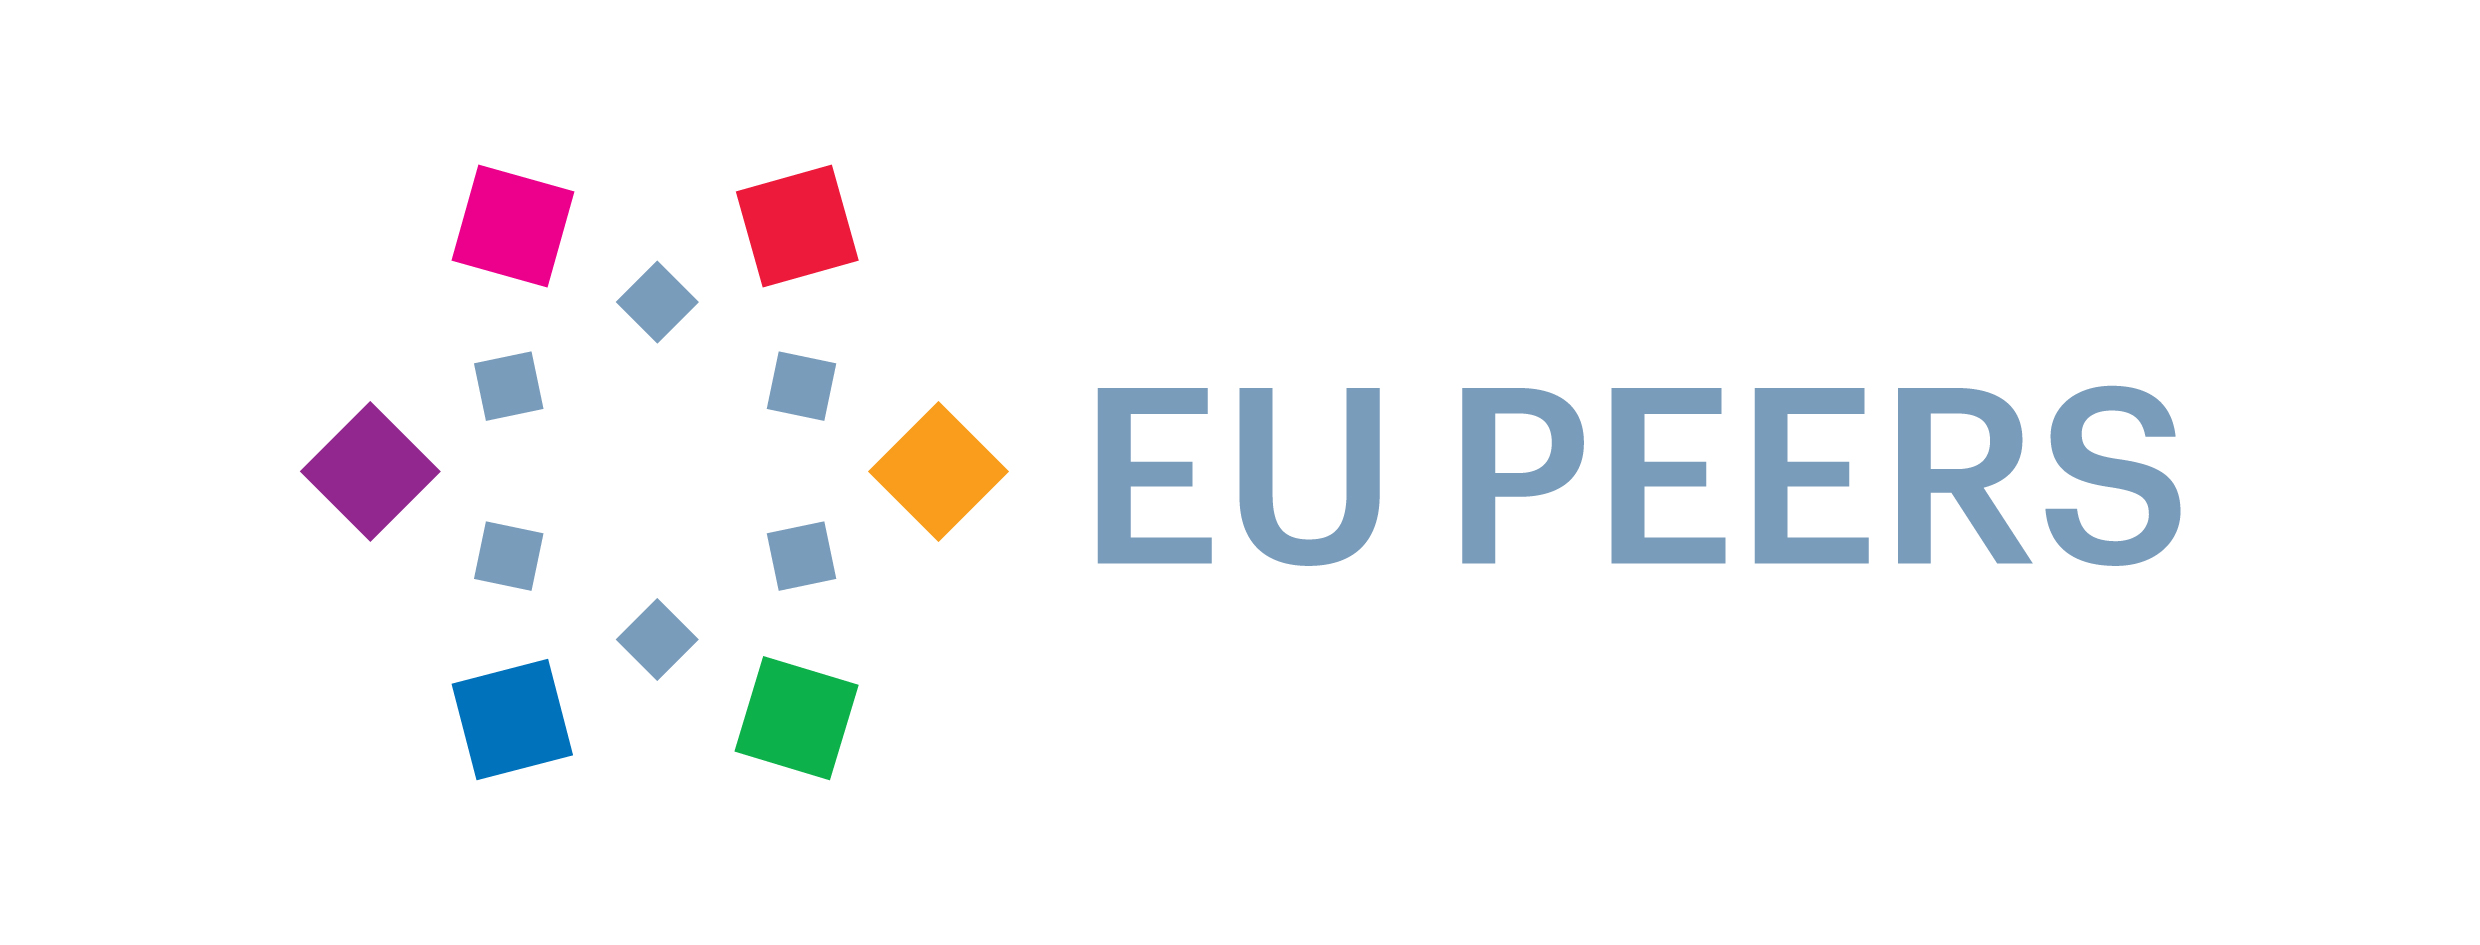 EU_PEERS_logo_COLOR_RGB (3).jpg